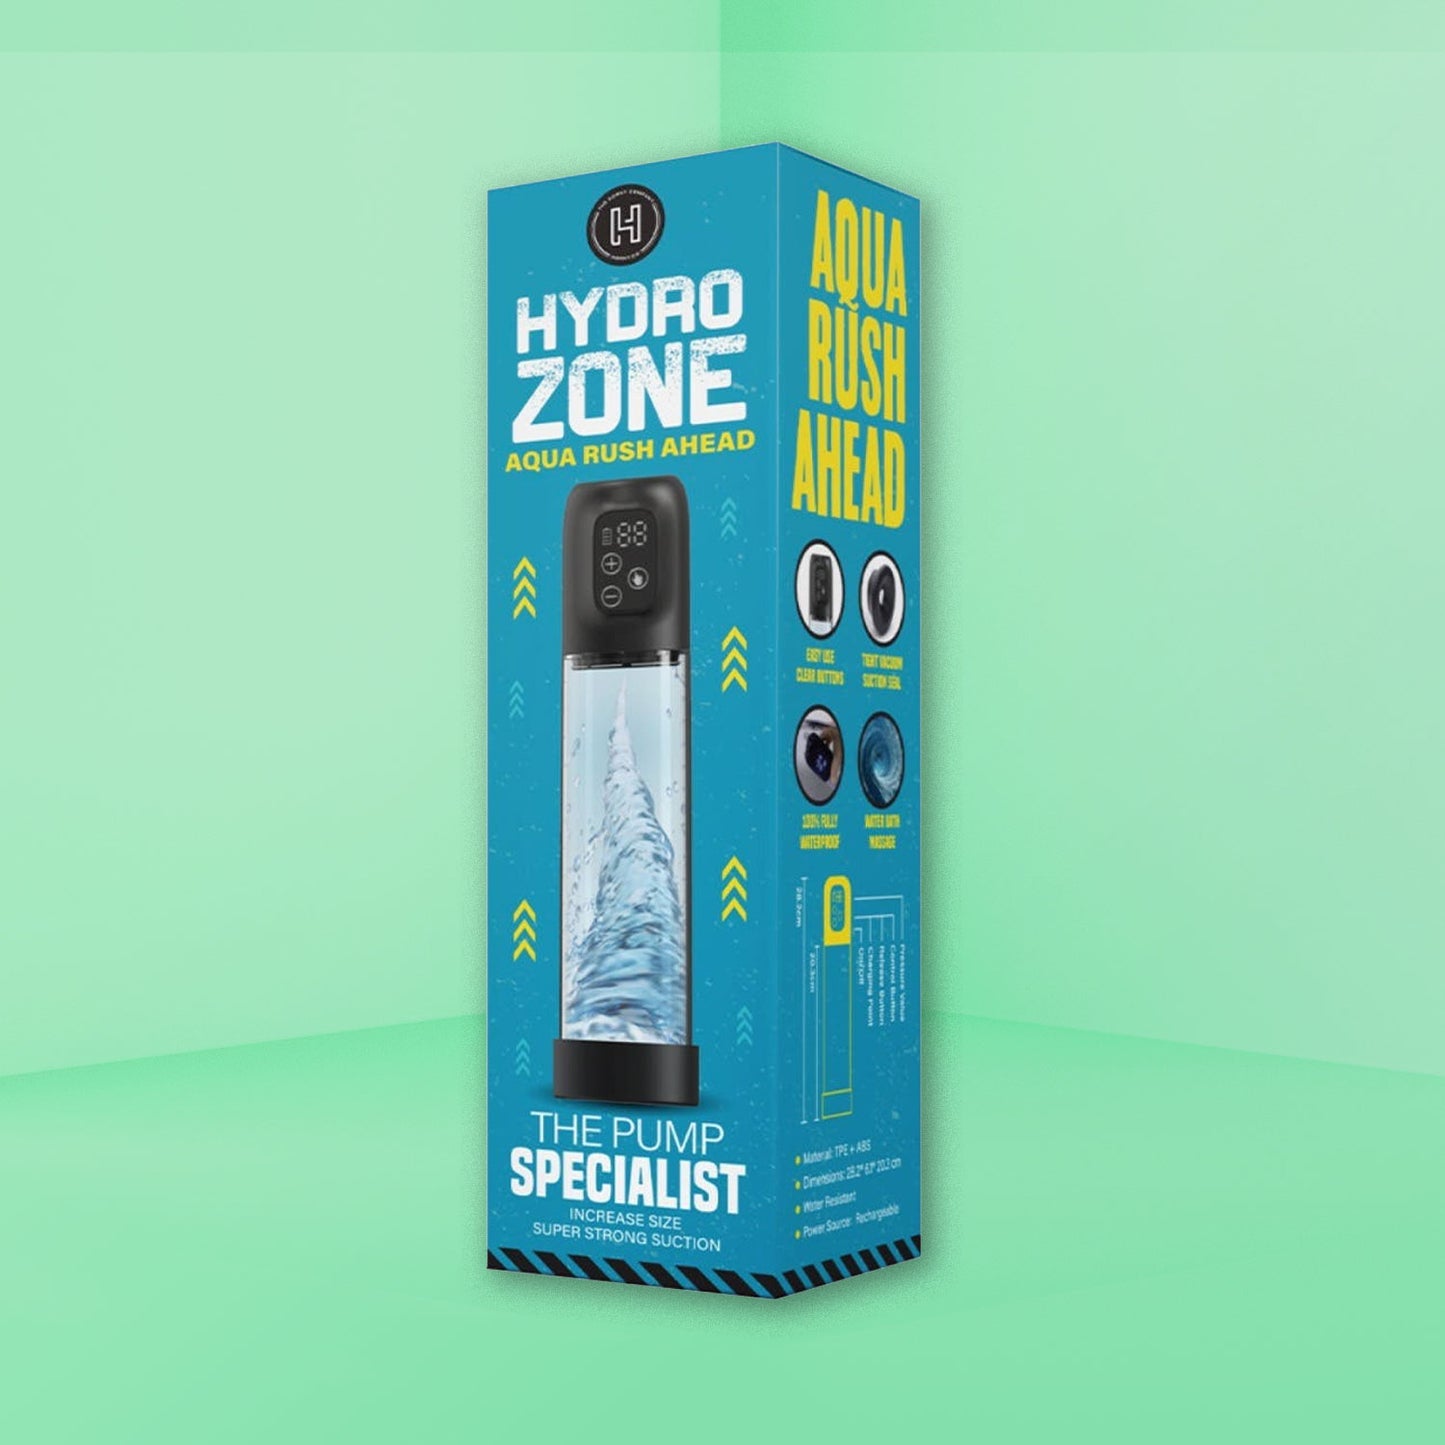 The Horny Company - The Pump Specialist Hydro Zone Aqua Rush Ahead Penis Pump Black/Clear